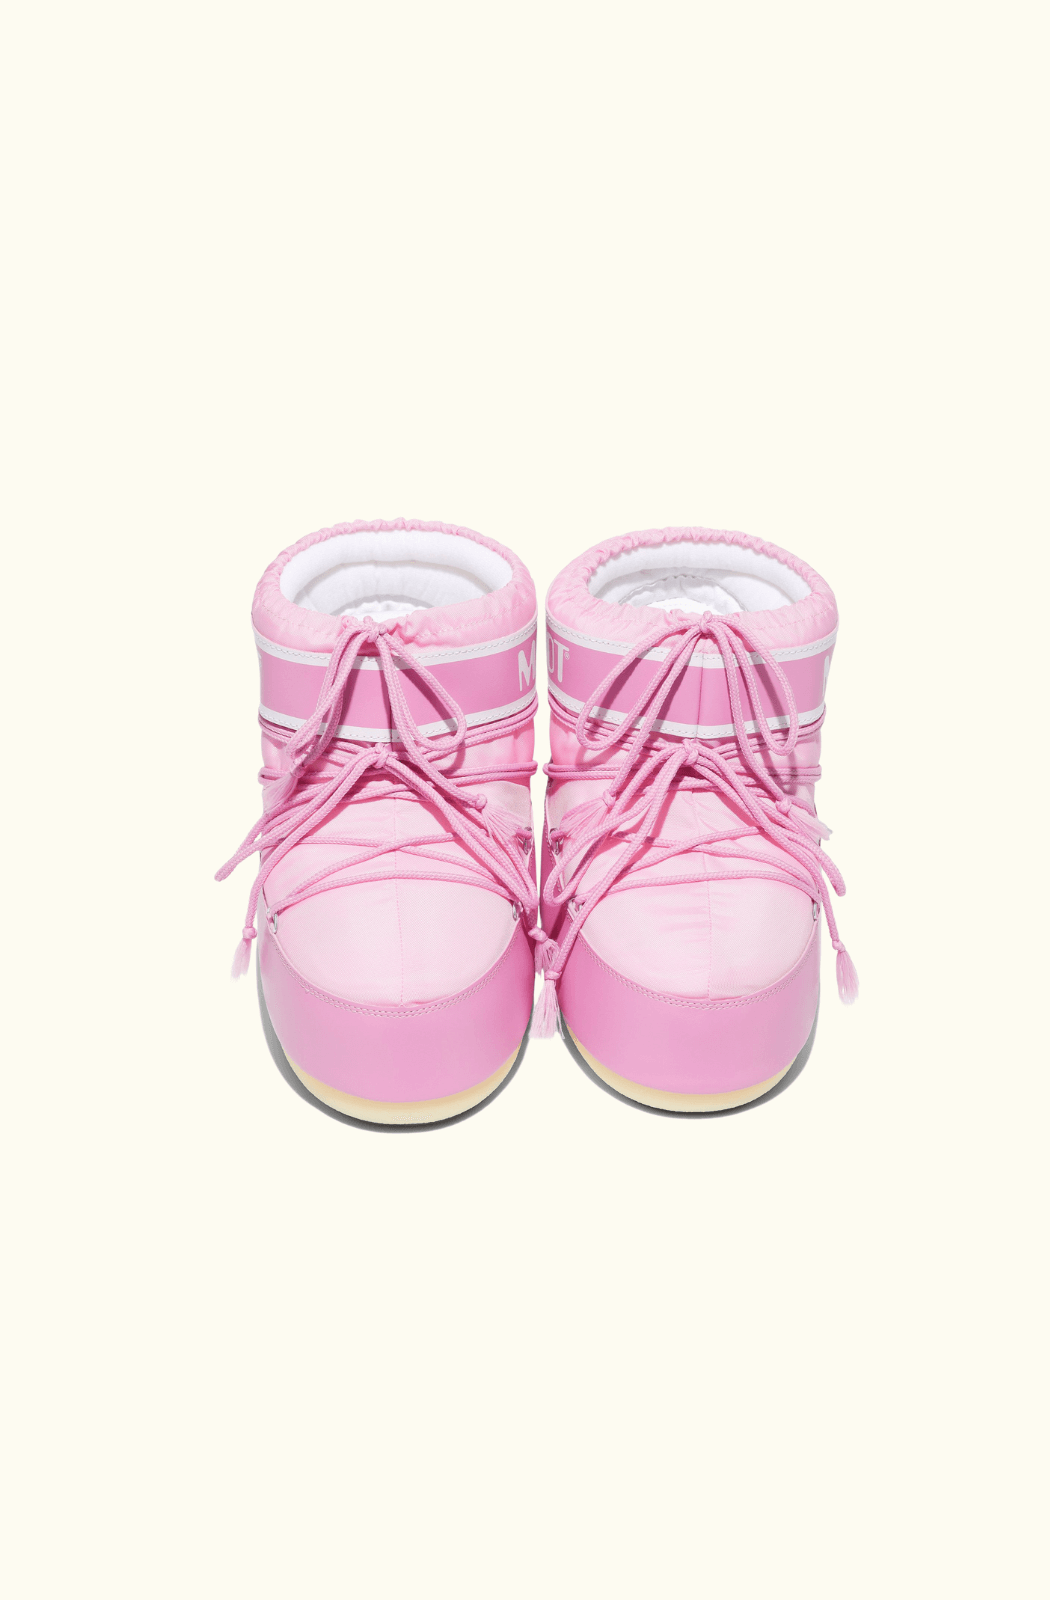 Moon Boot Nylon Icon Low - Pink